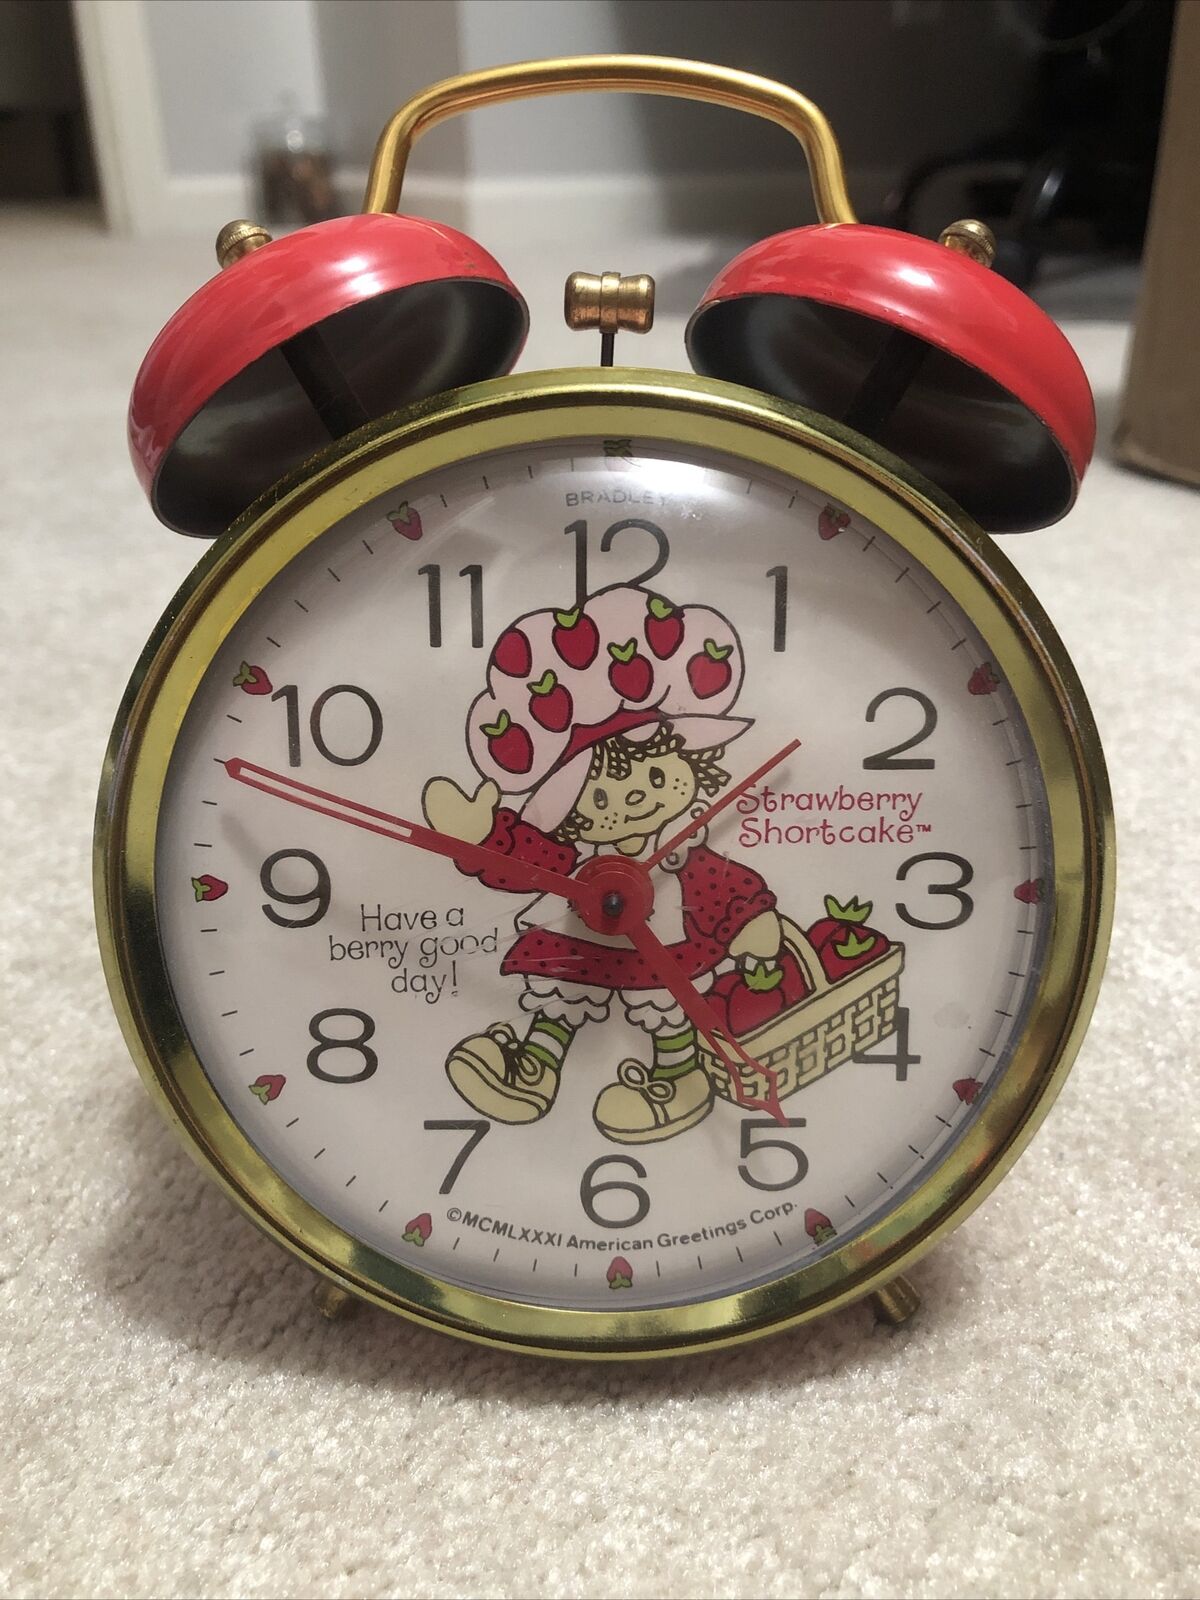 Vintage 1981 Strawberry Shortcake Alarm Clock American Greetings Corp Bradley